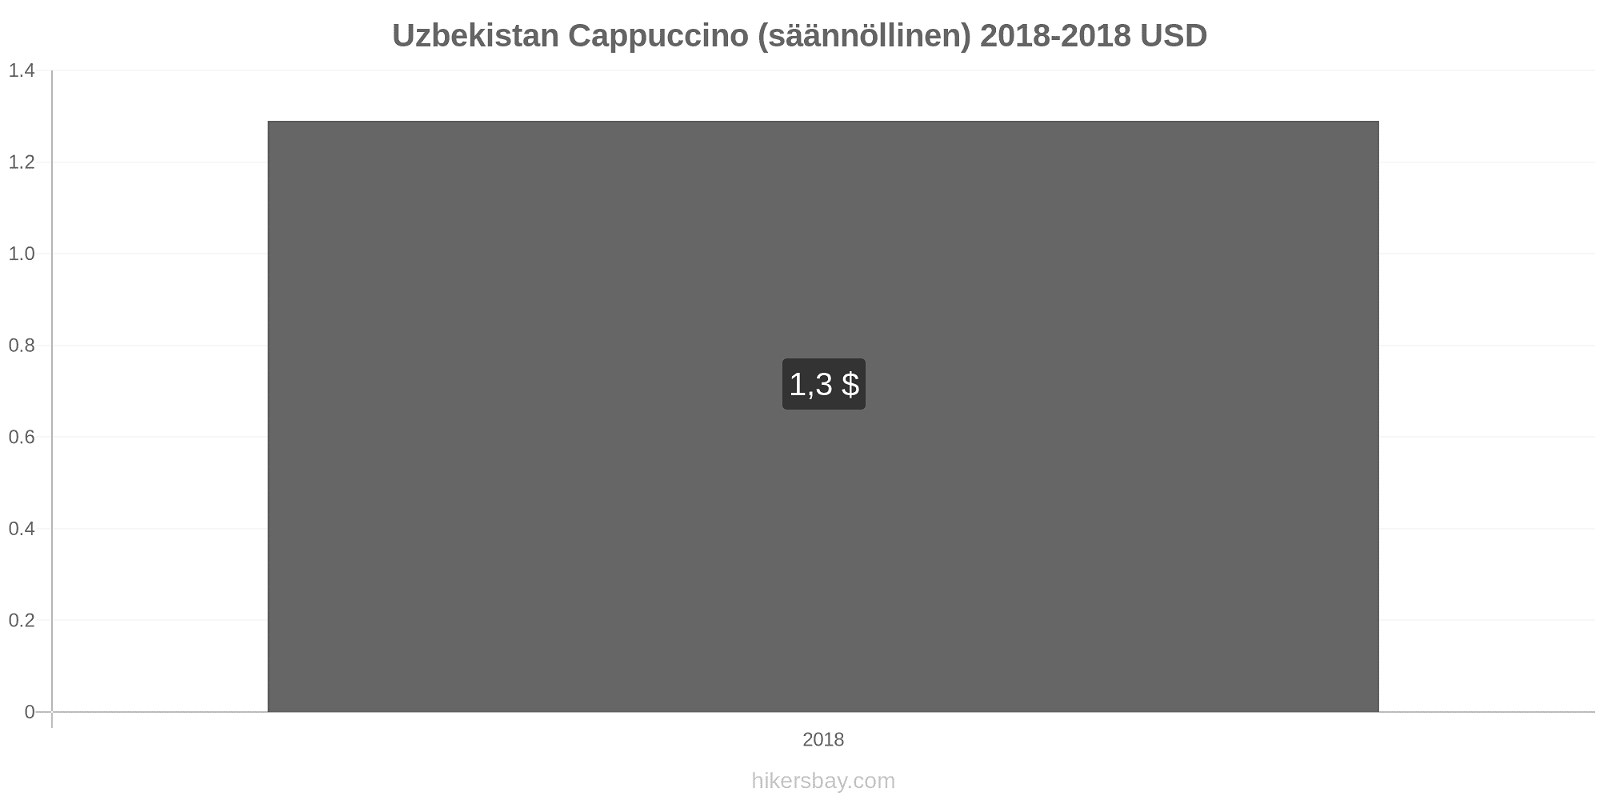 Uzbekistan hintojen muutokset Cappuccino (säännöllinen) hikersbay.com